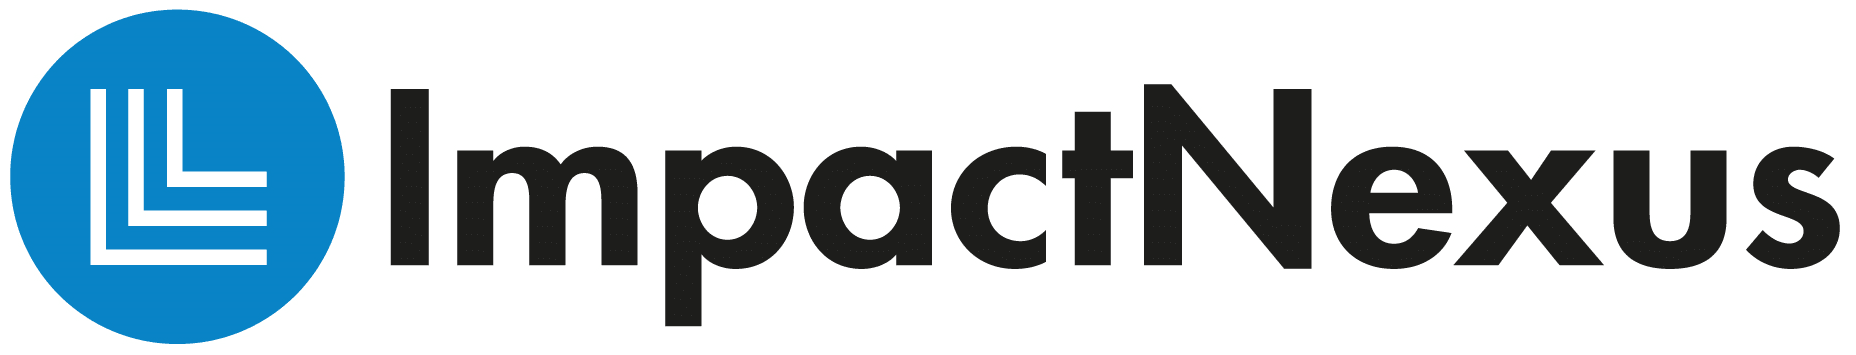 ImpactNexus logo